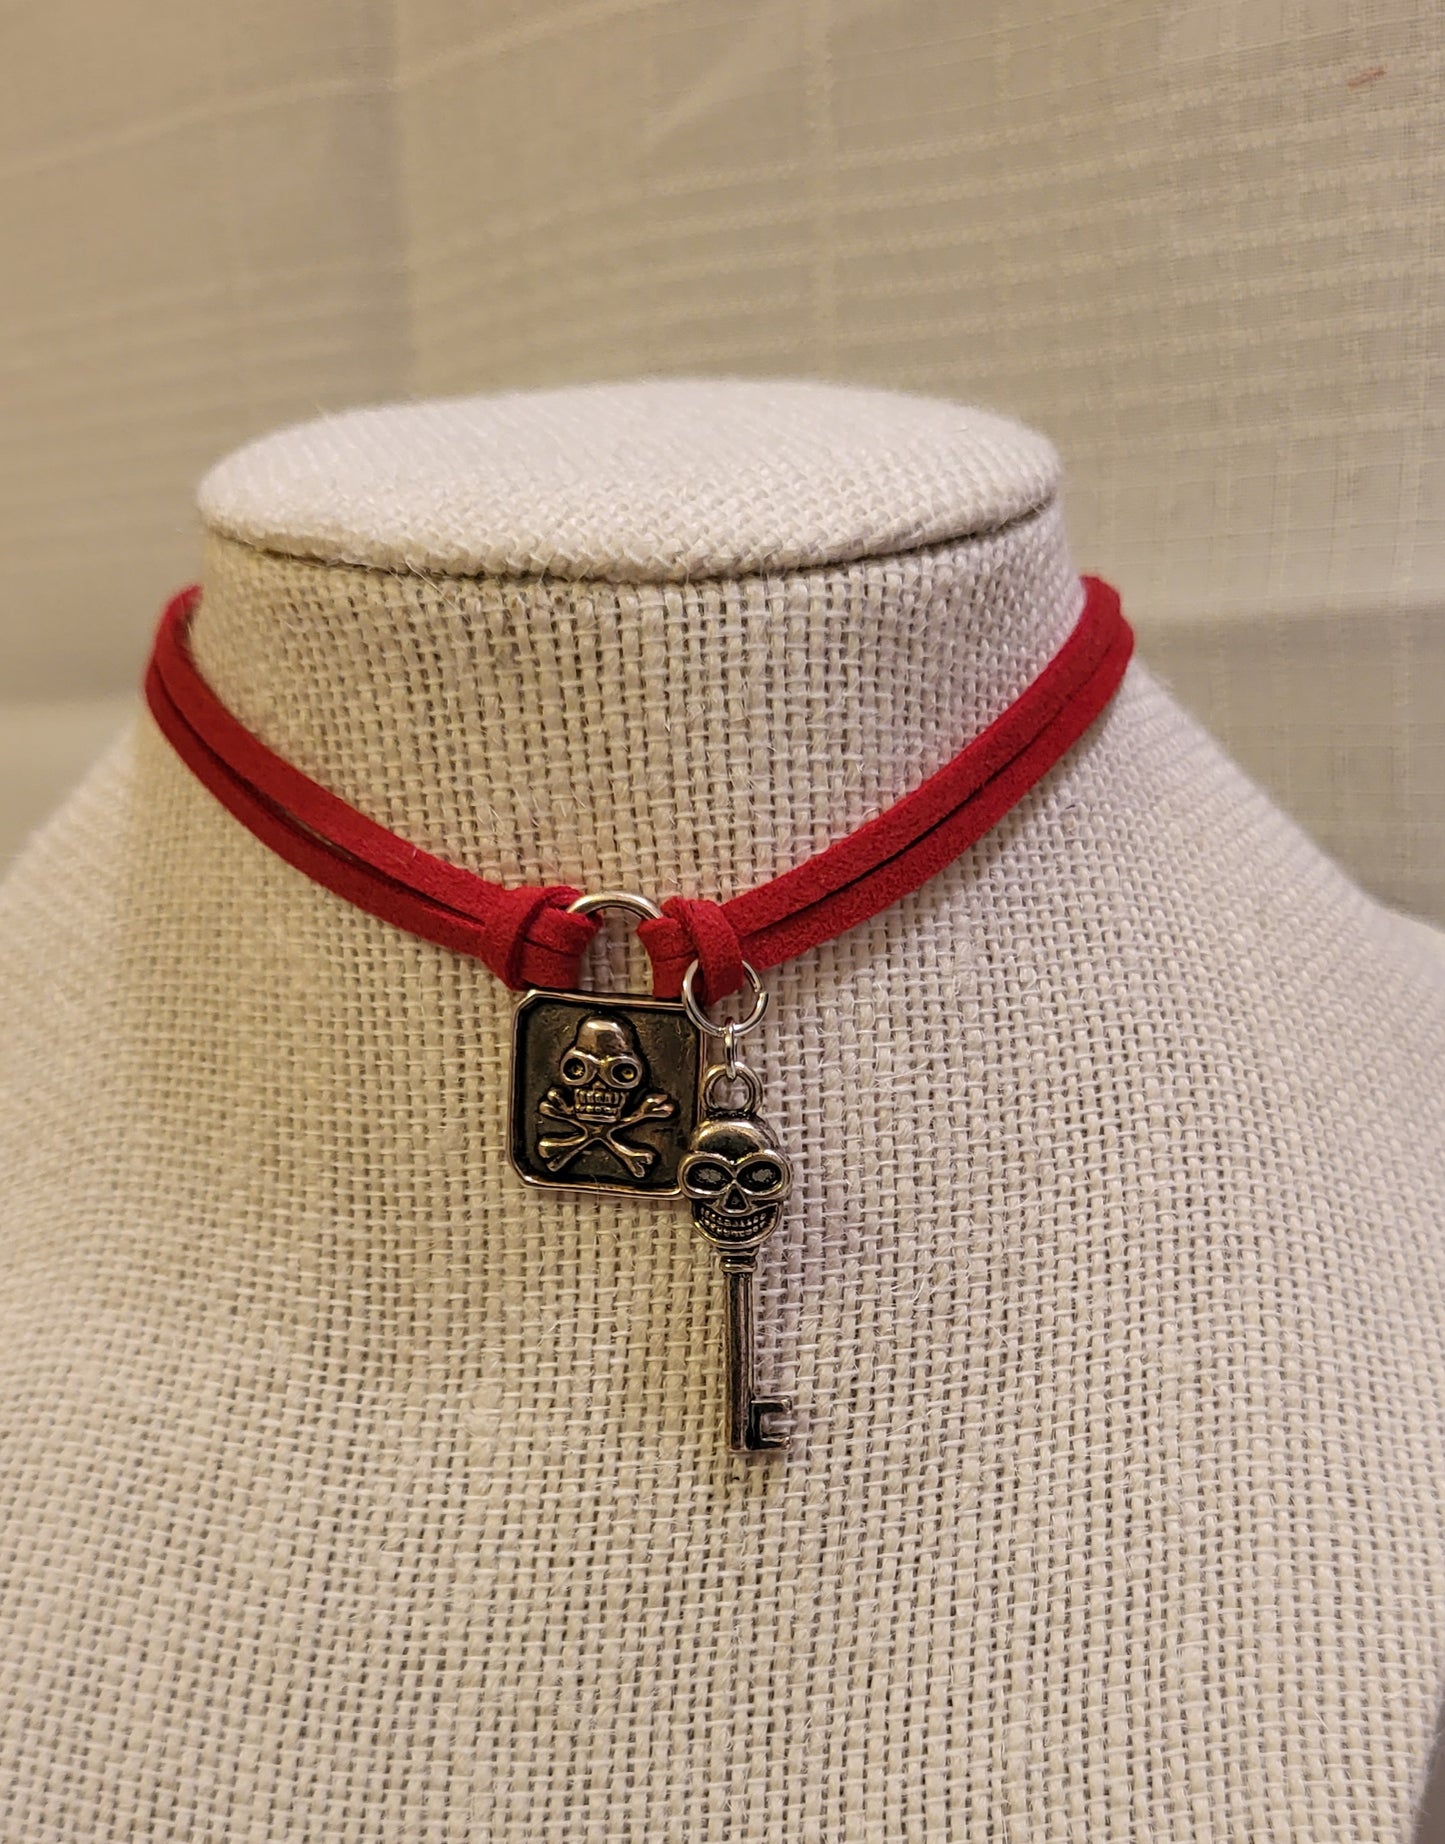 Lock & Key Choker, Halloween choker necklace